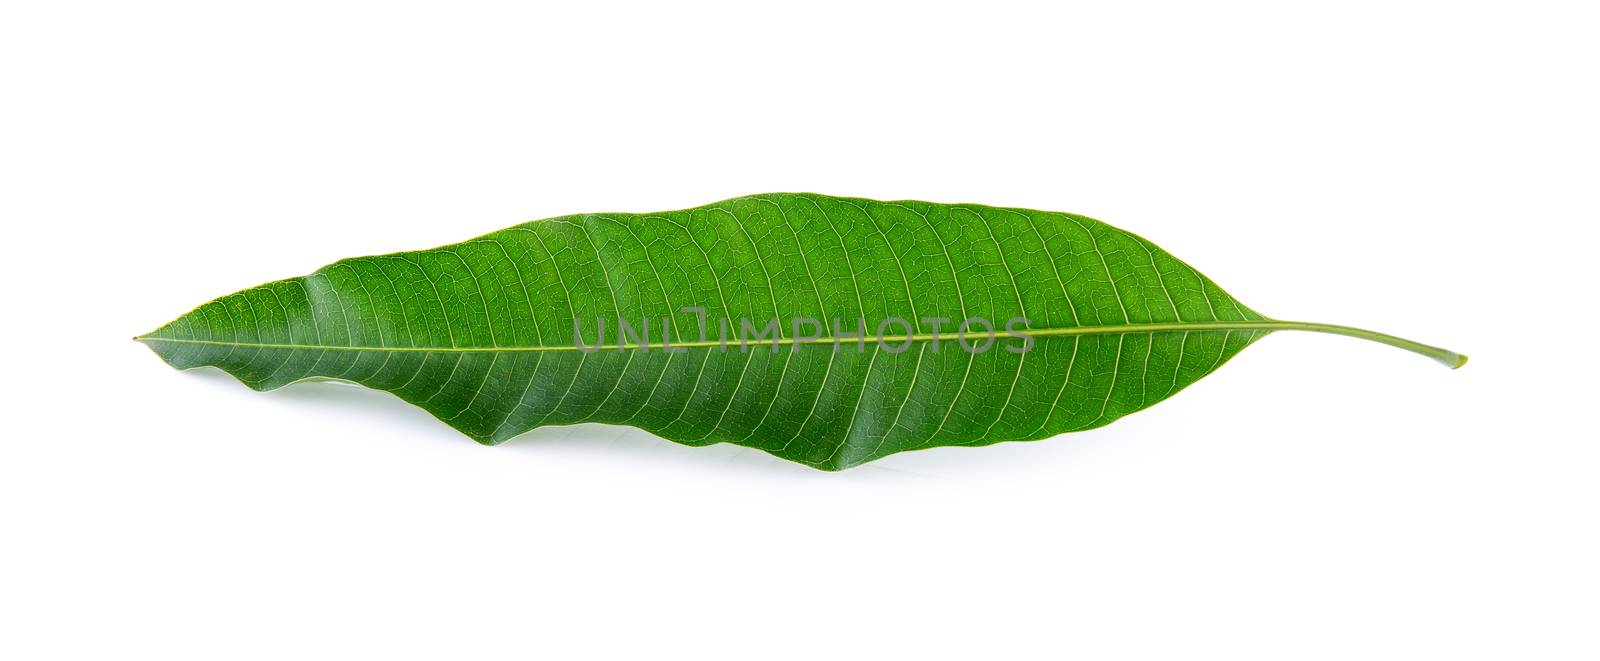 Mango leaf on a white background by sommai